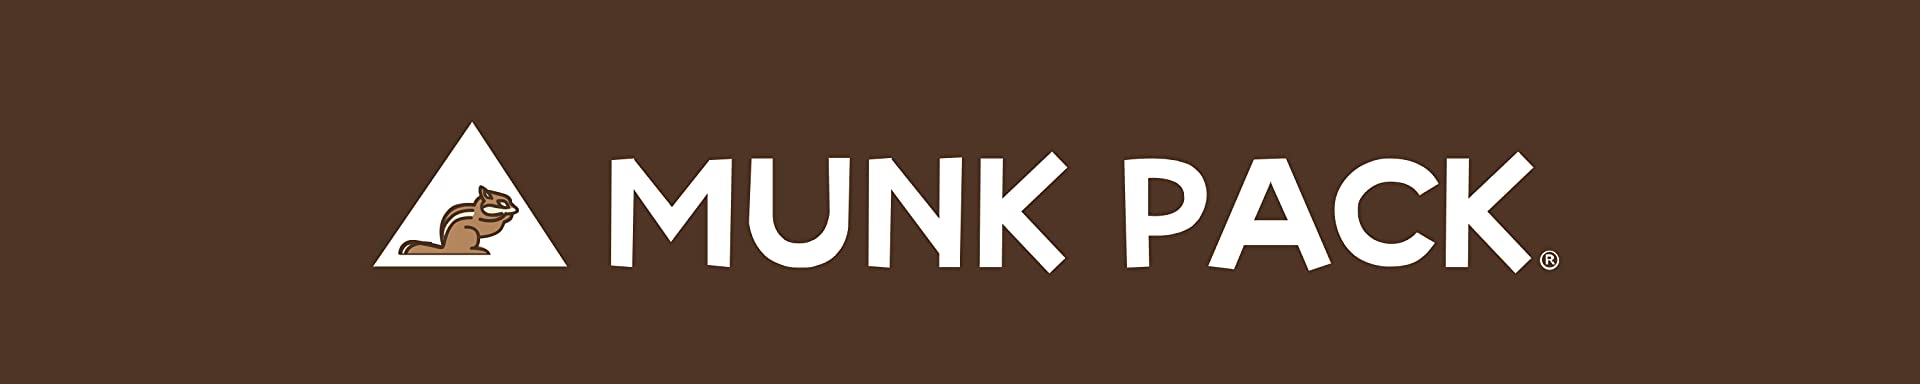 Munk Pack Guide